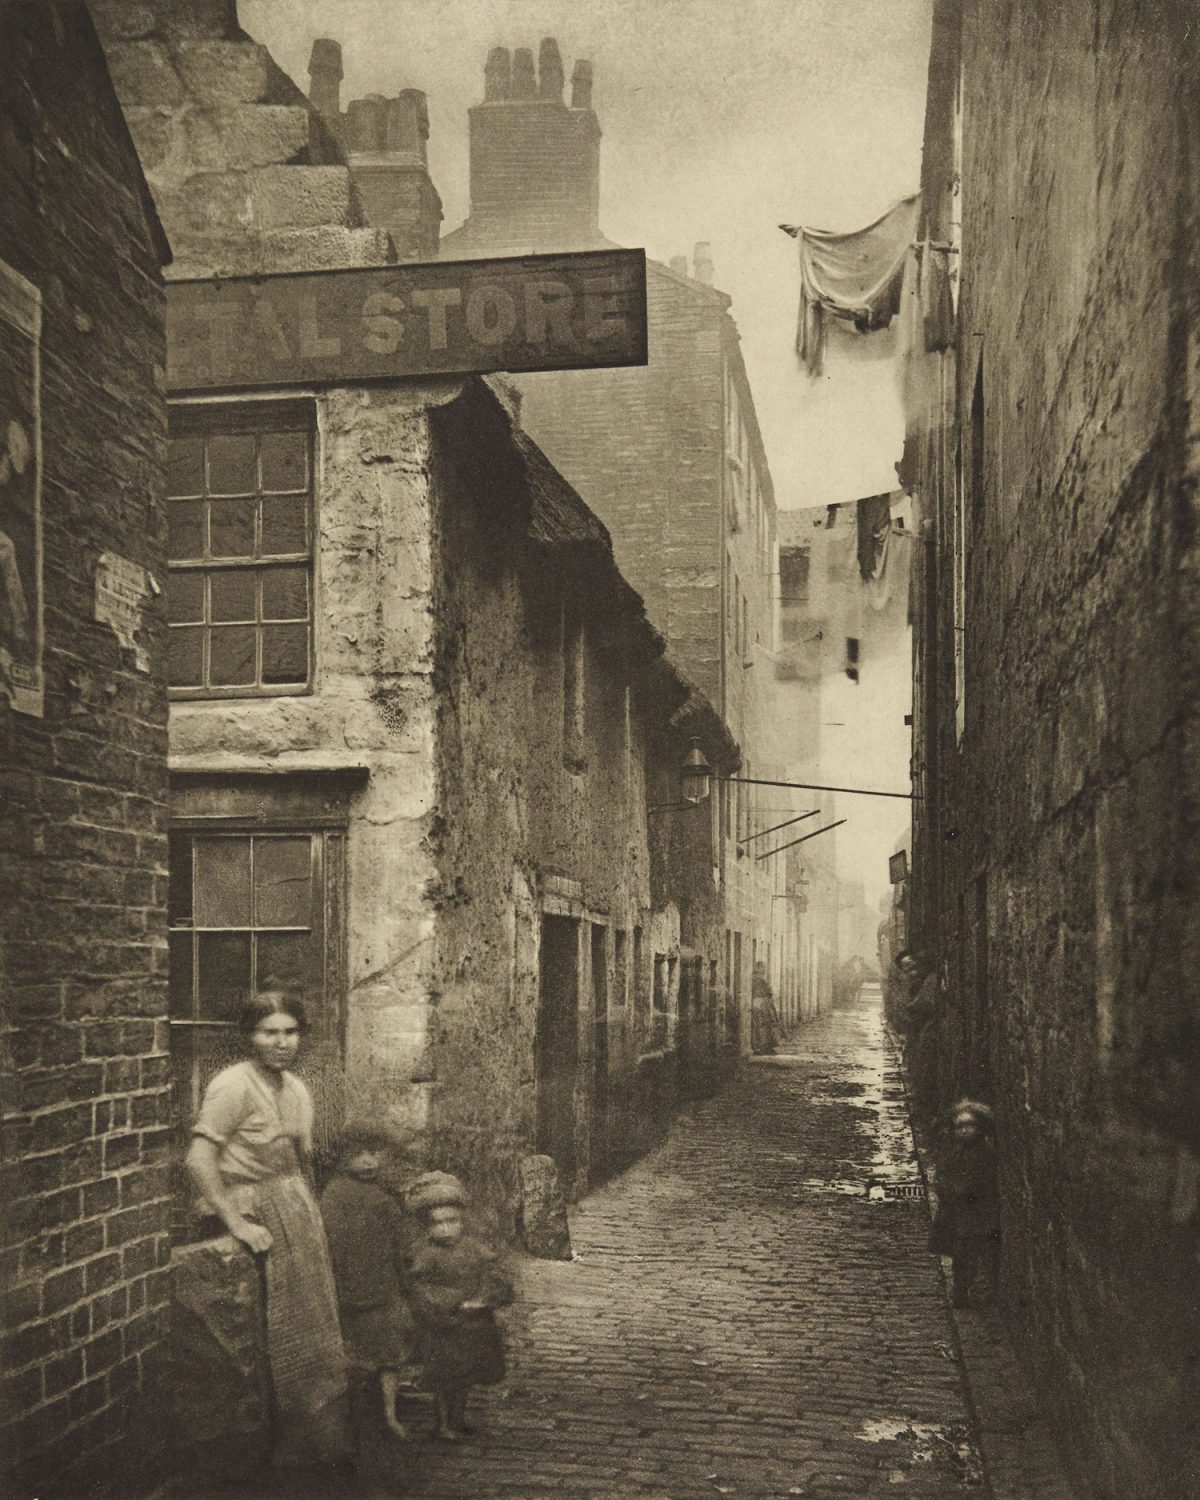 Thomas Annan, photography, Glasgow, 1800s